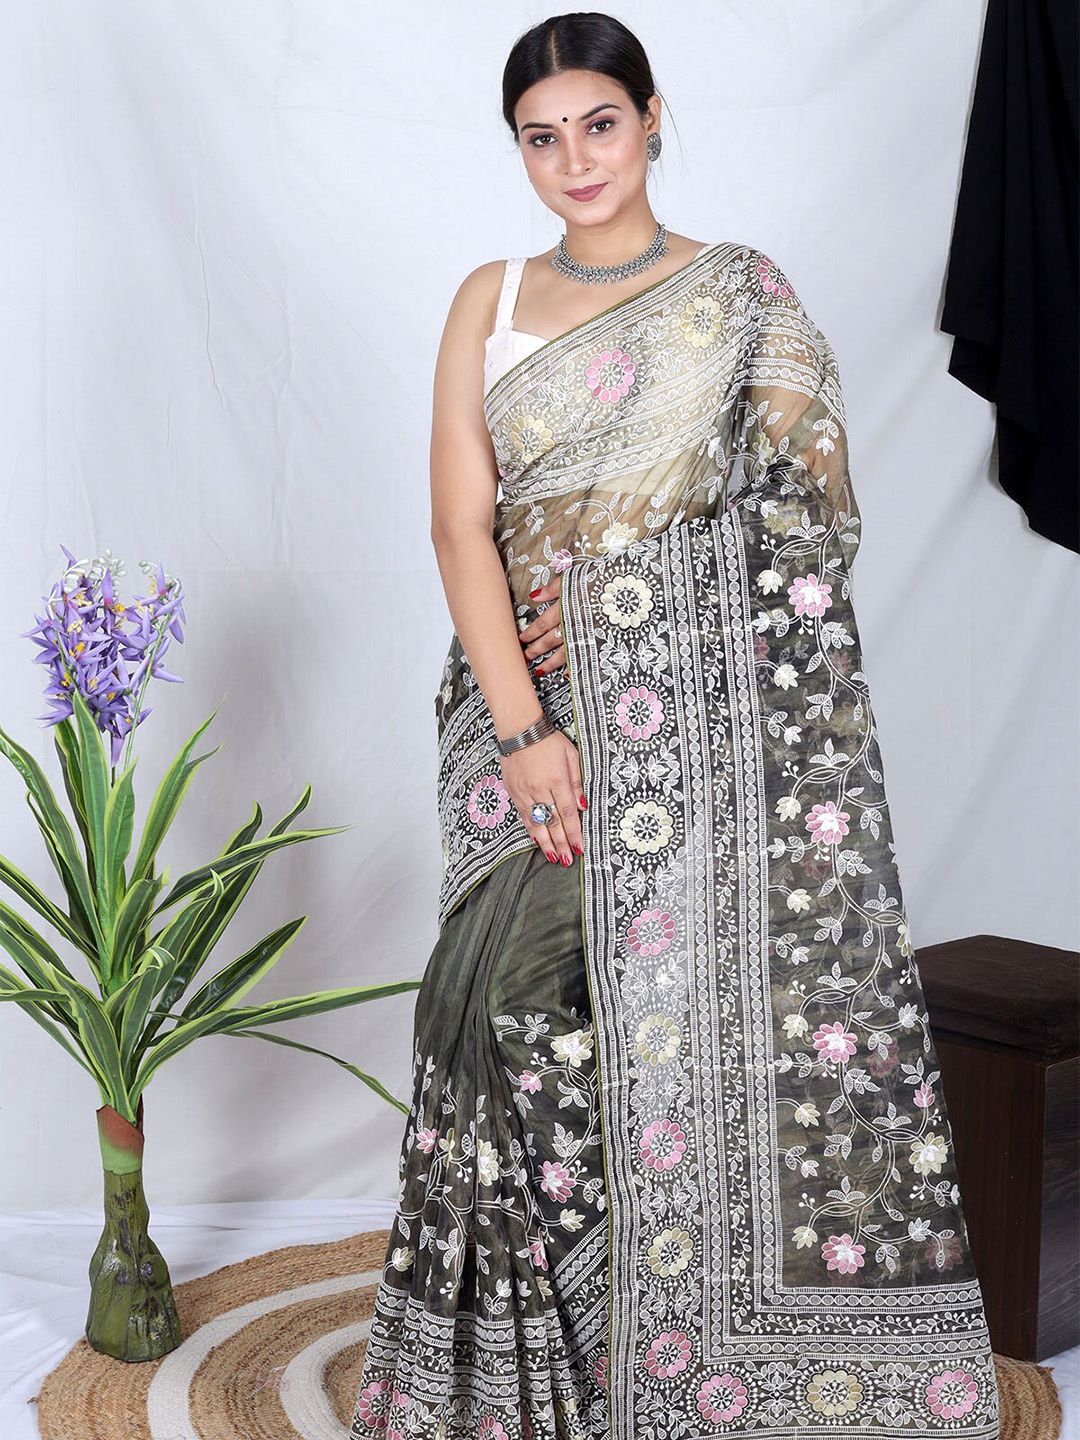 ODETTE Black & White Floral Embroidered Organza Saree Price in India